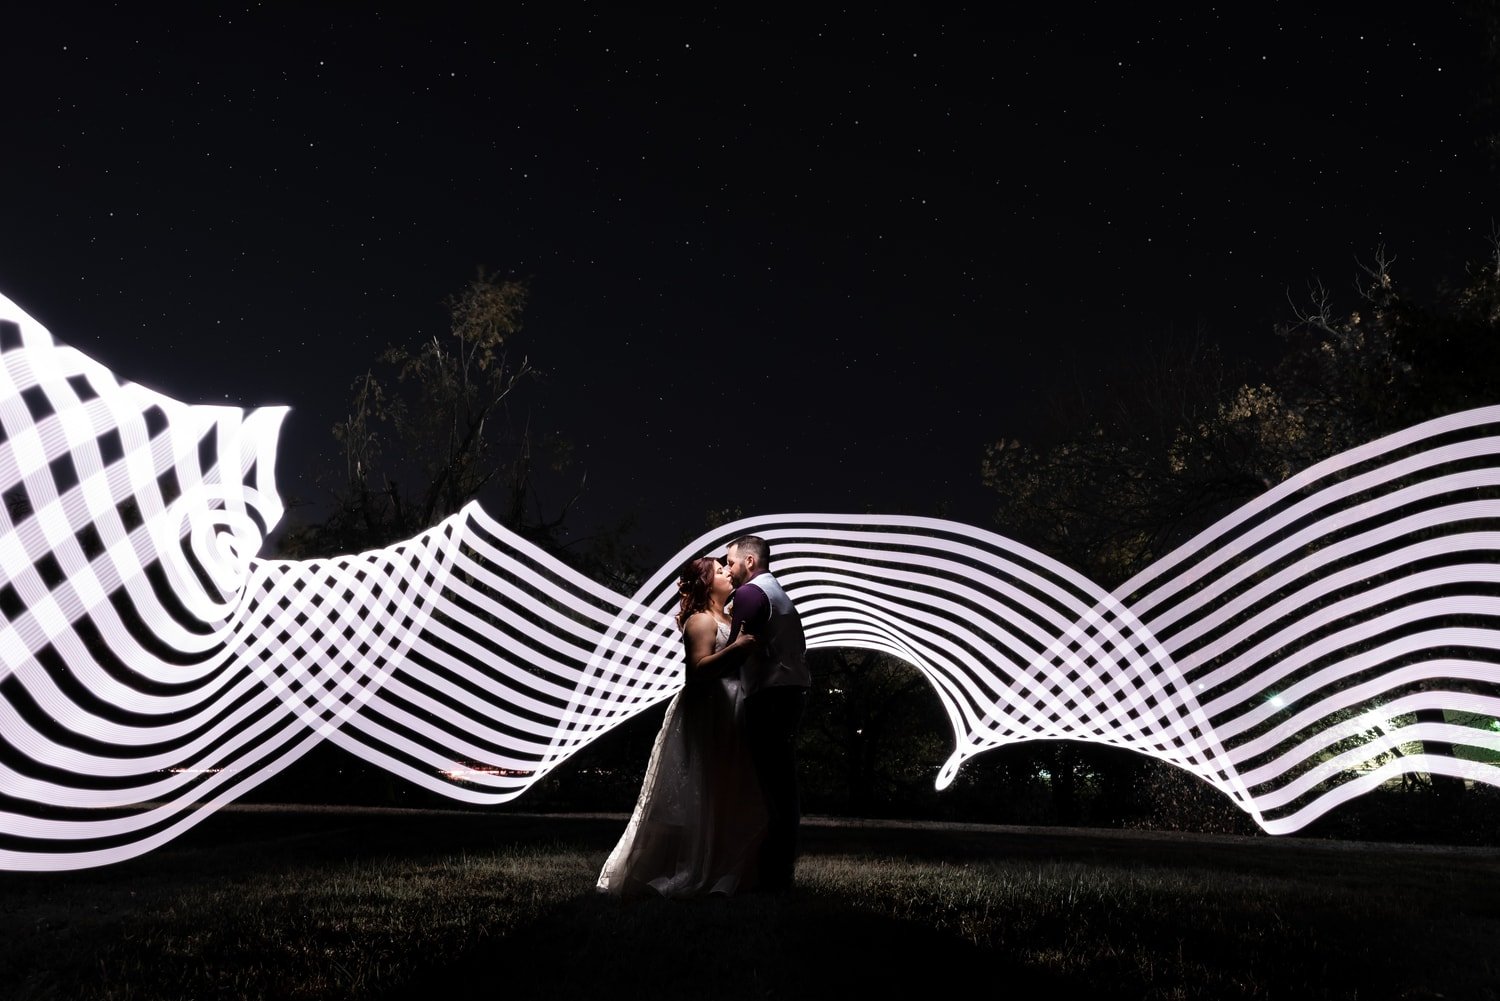 wedding-photographer-photography-okc-edmond-oklahoma-city-beautiful-bride-groom-night-portrait-light-saber-light-wand-fun-chadandbriephotography.jpg